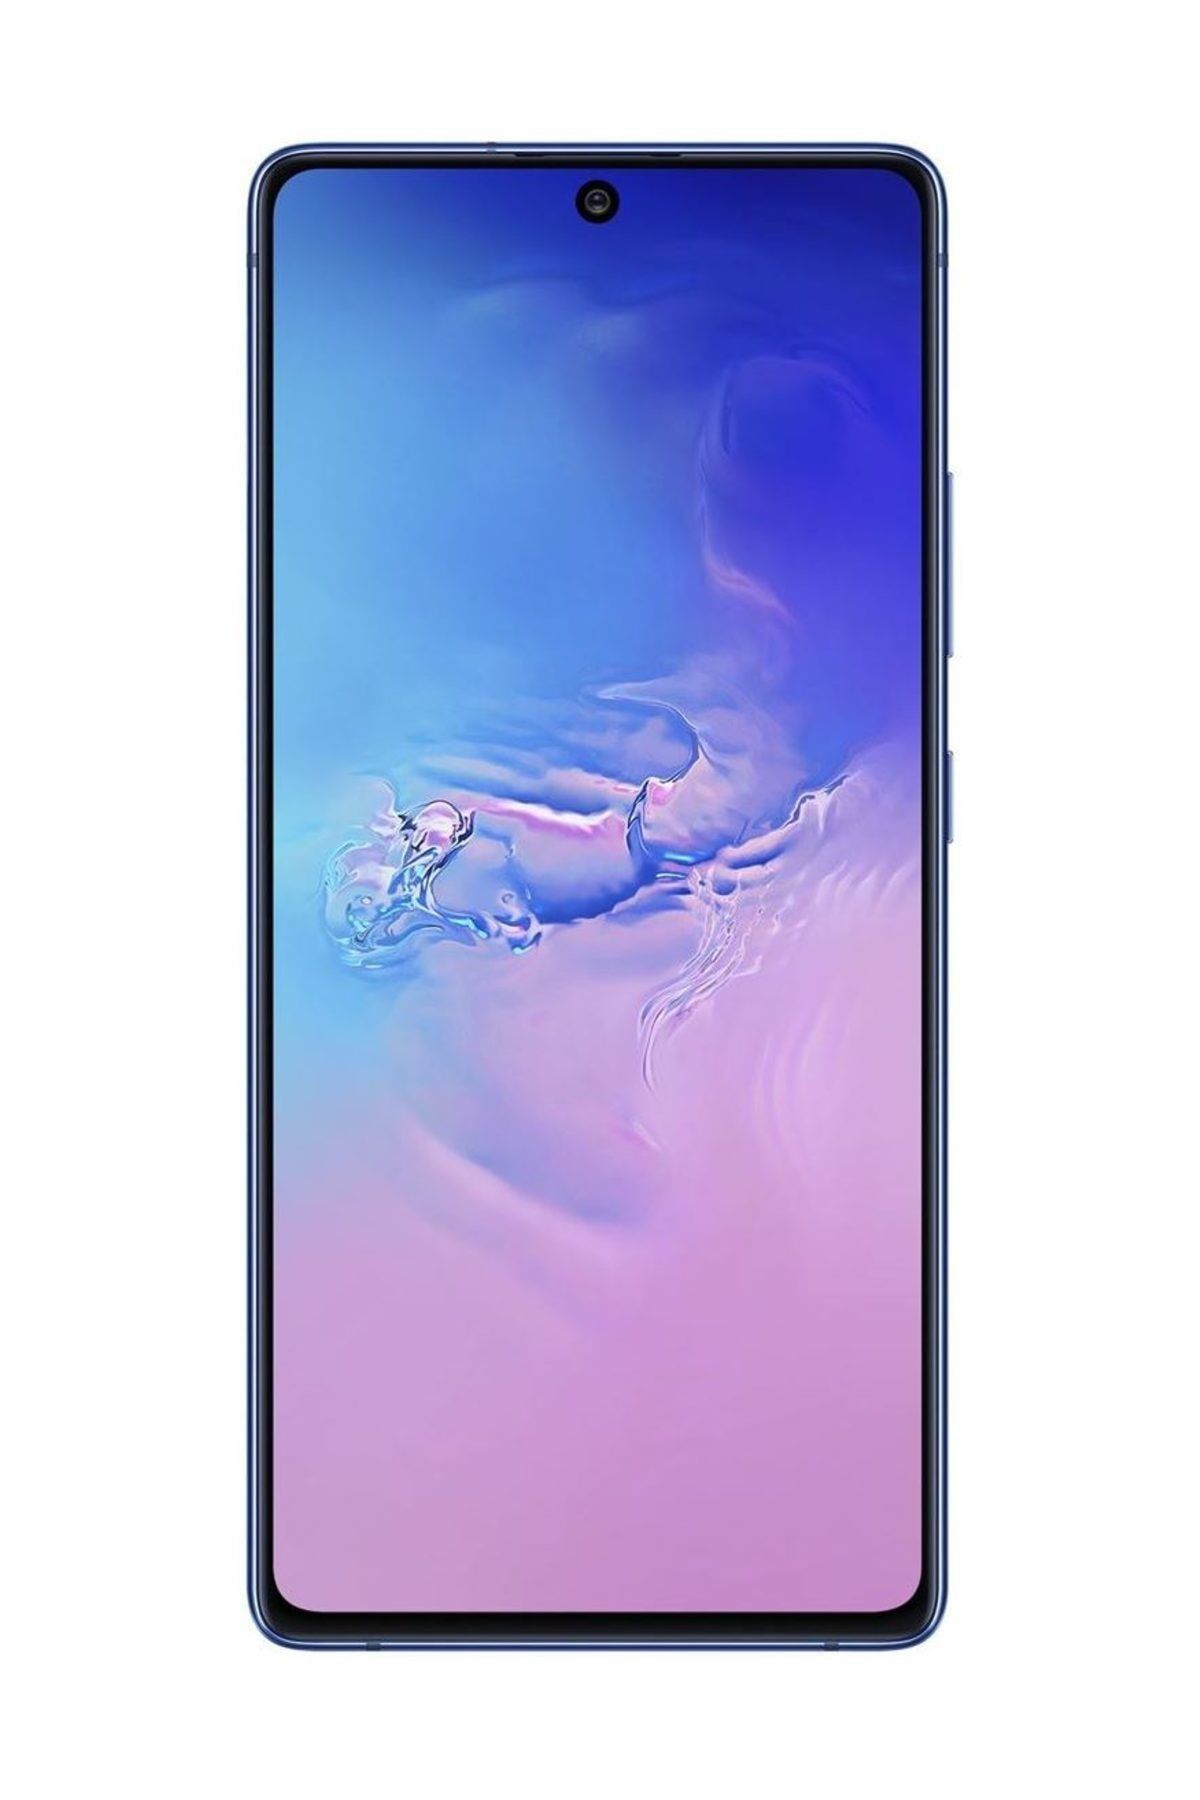 Samsung Galaxy S10 Lite 128GB Prizma Mavi (Çift SIM) Cep Telefonu (Samsung Türkiye Garantili)